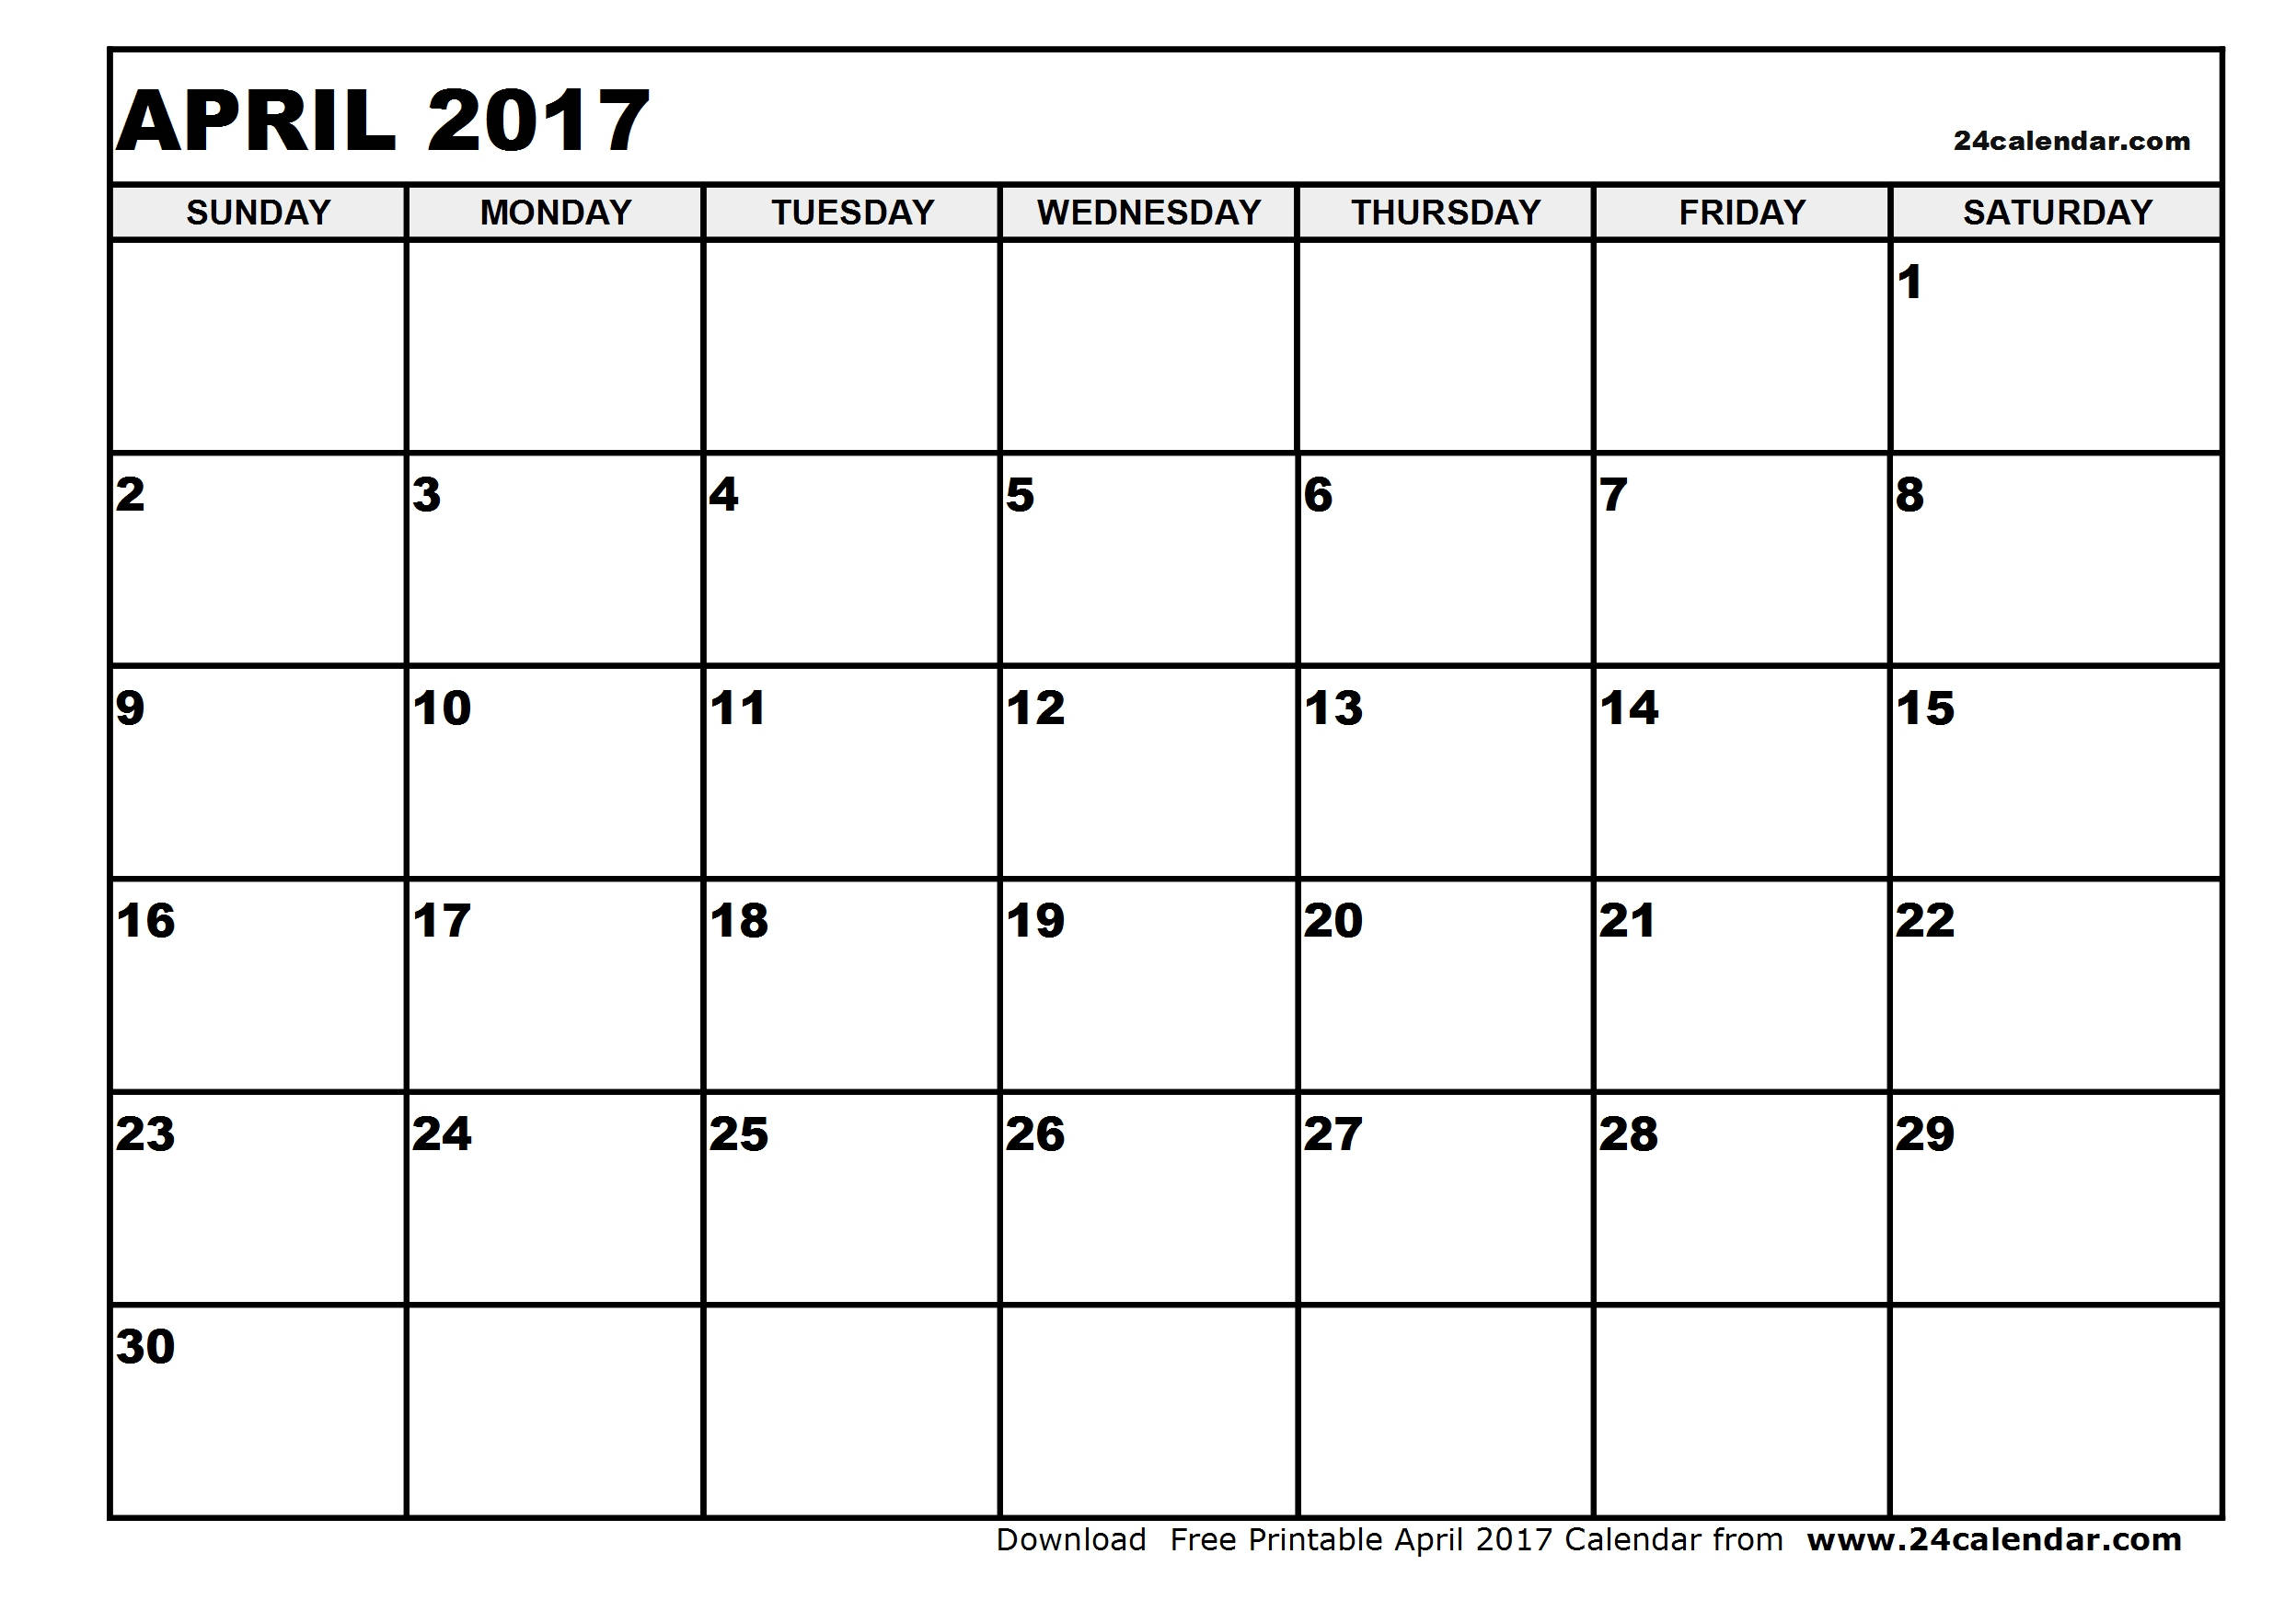 Blank April 2017 Calendar in Printable format.